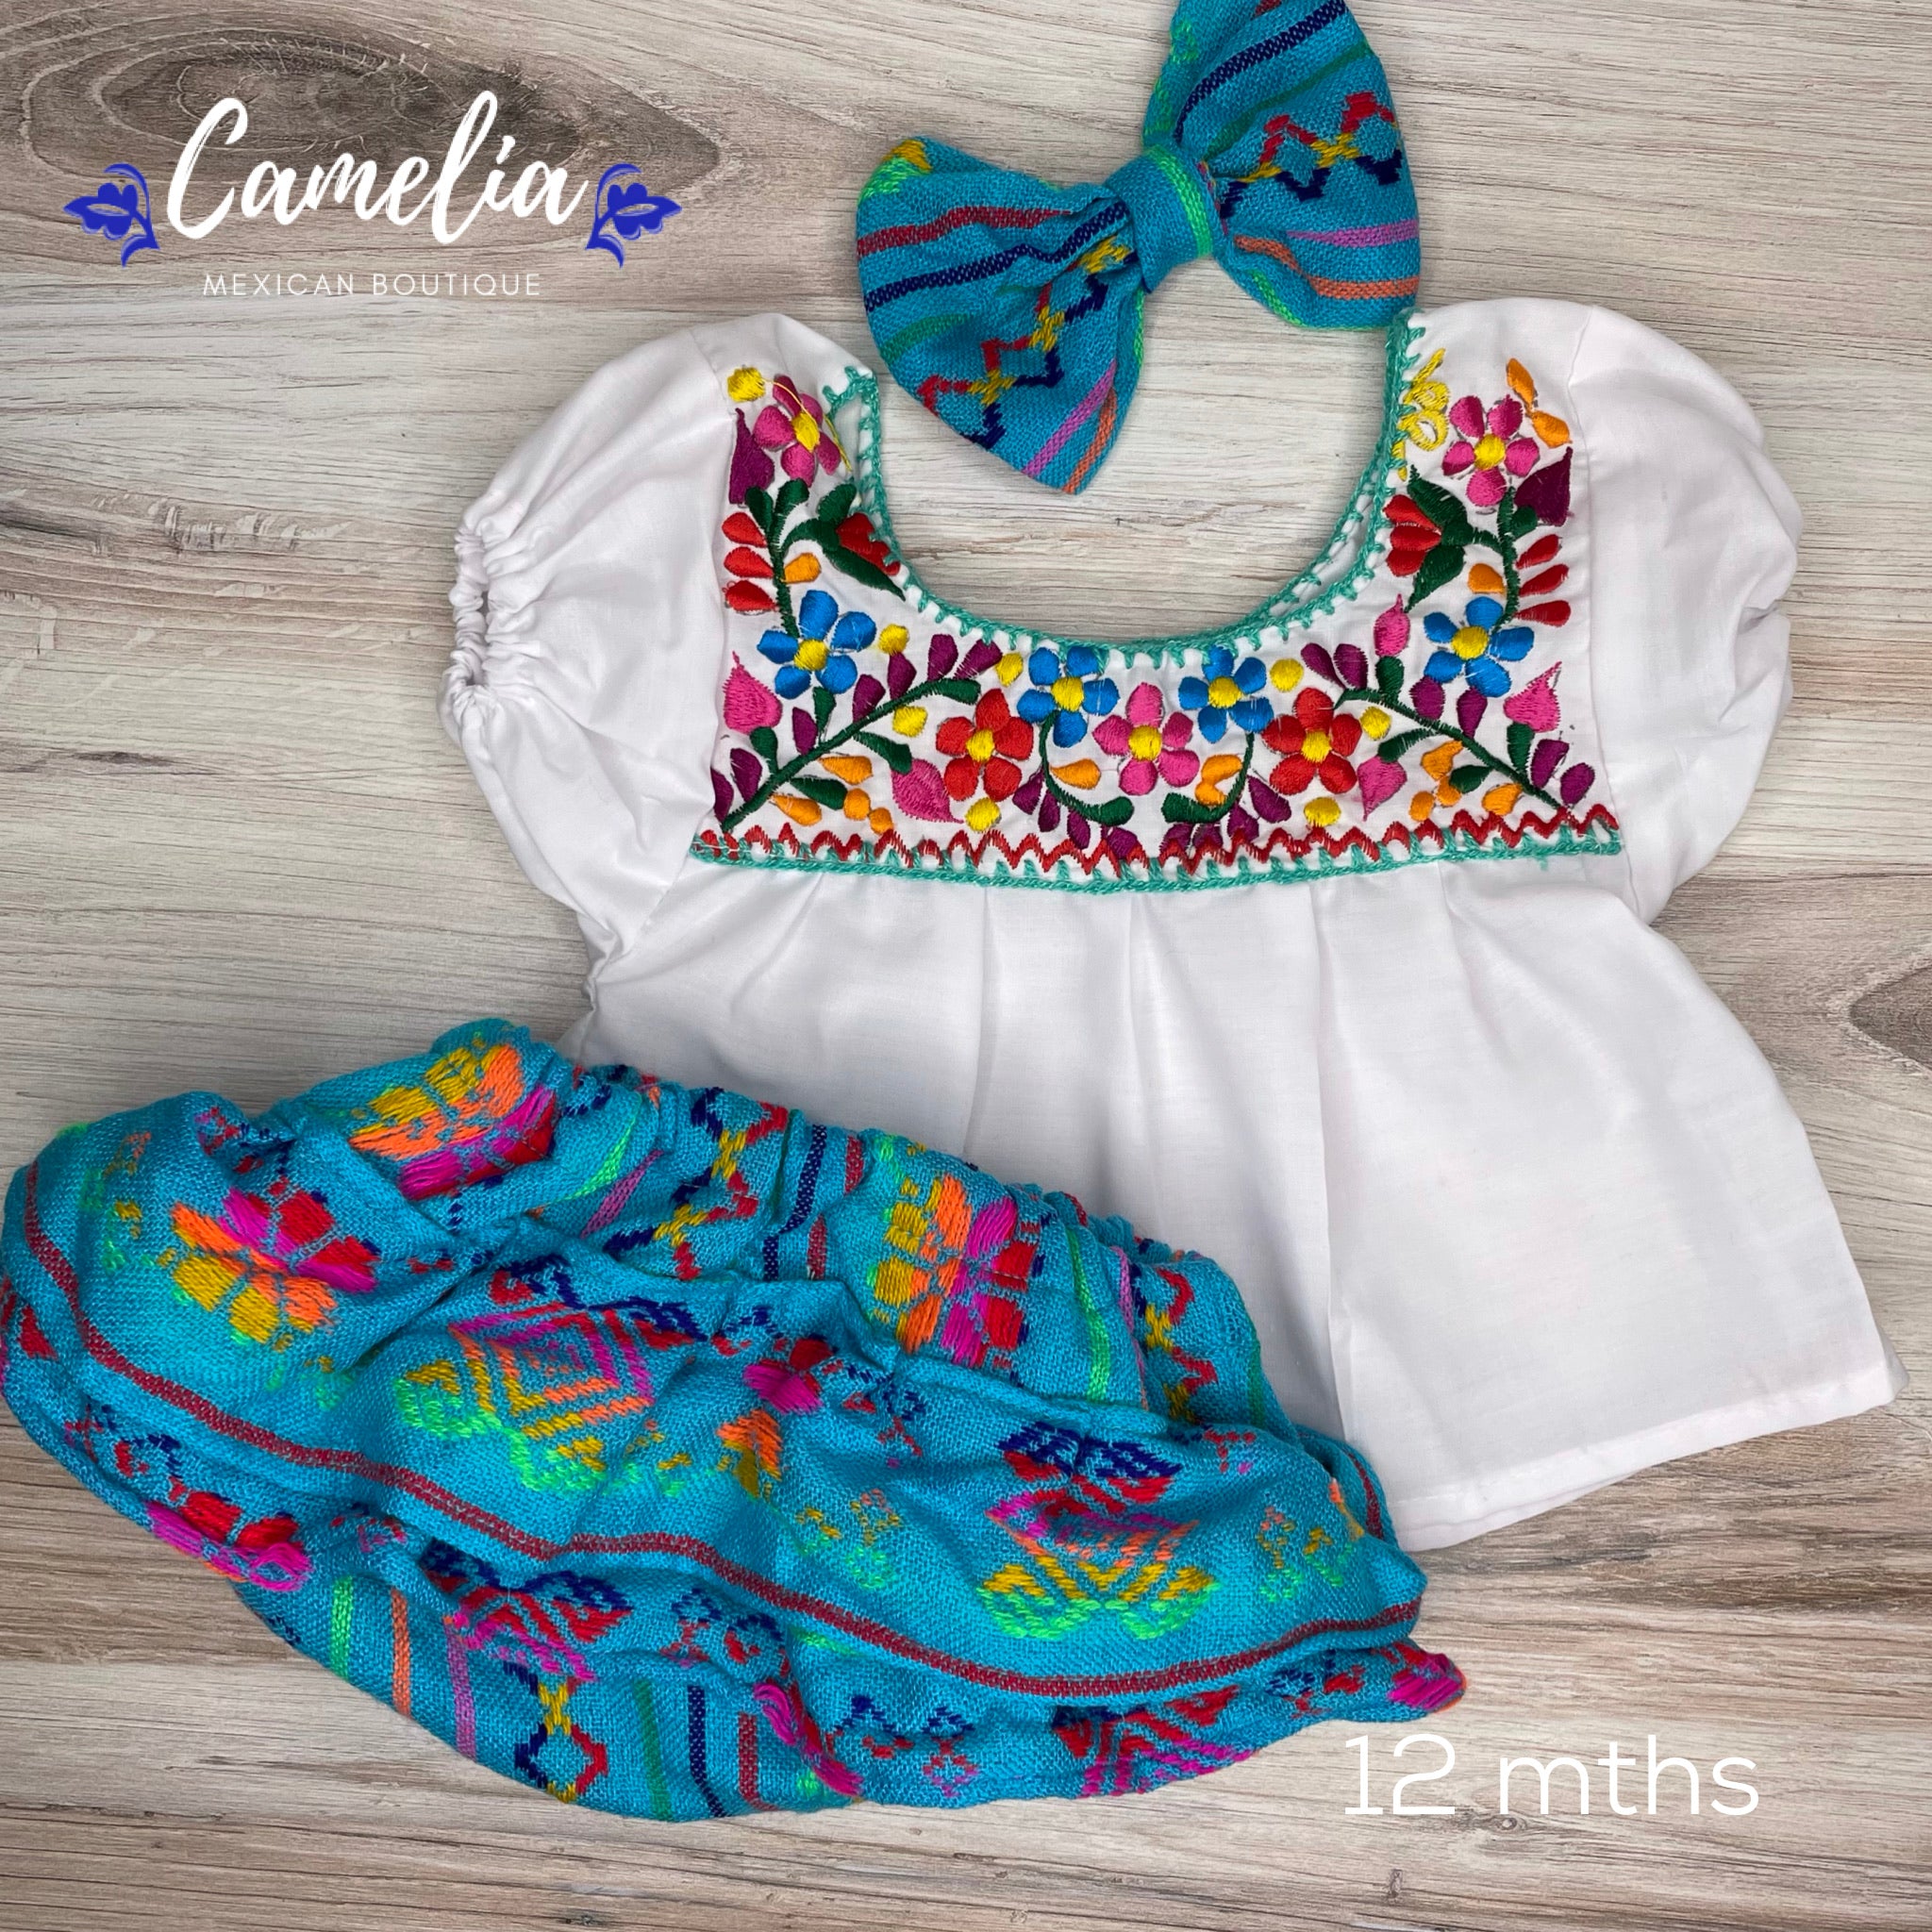 Cambaya Mexican Baby Bloomer – Camelia Mexican Boutique